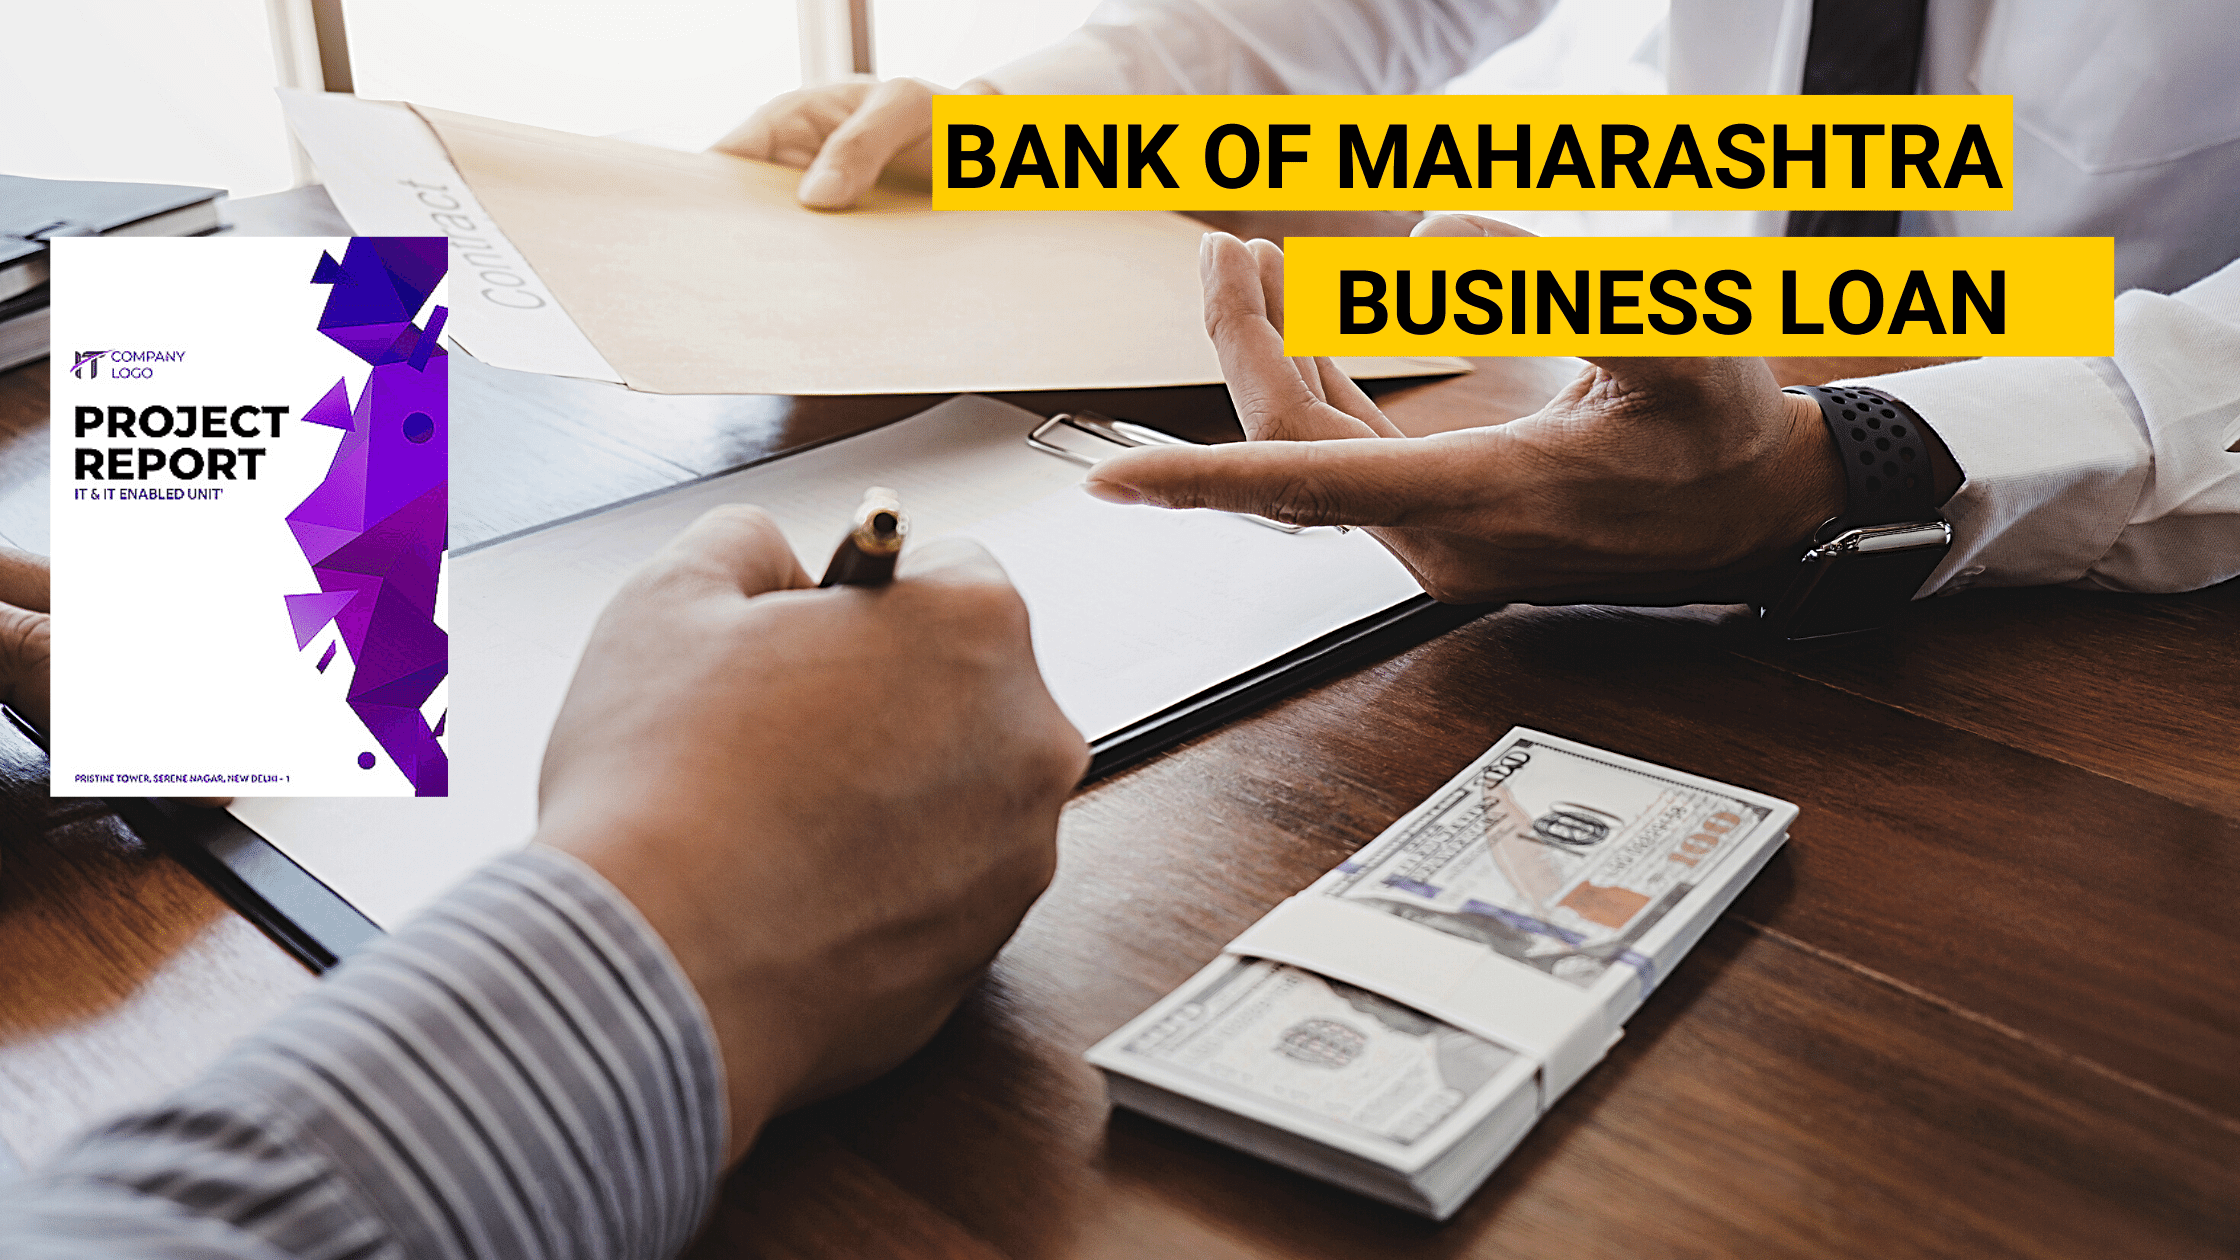 Bank of Maharashtra Business Loan